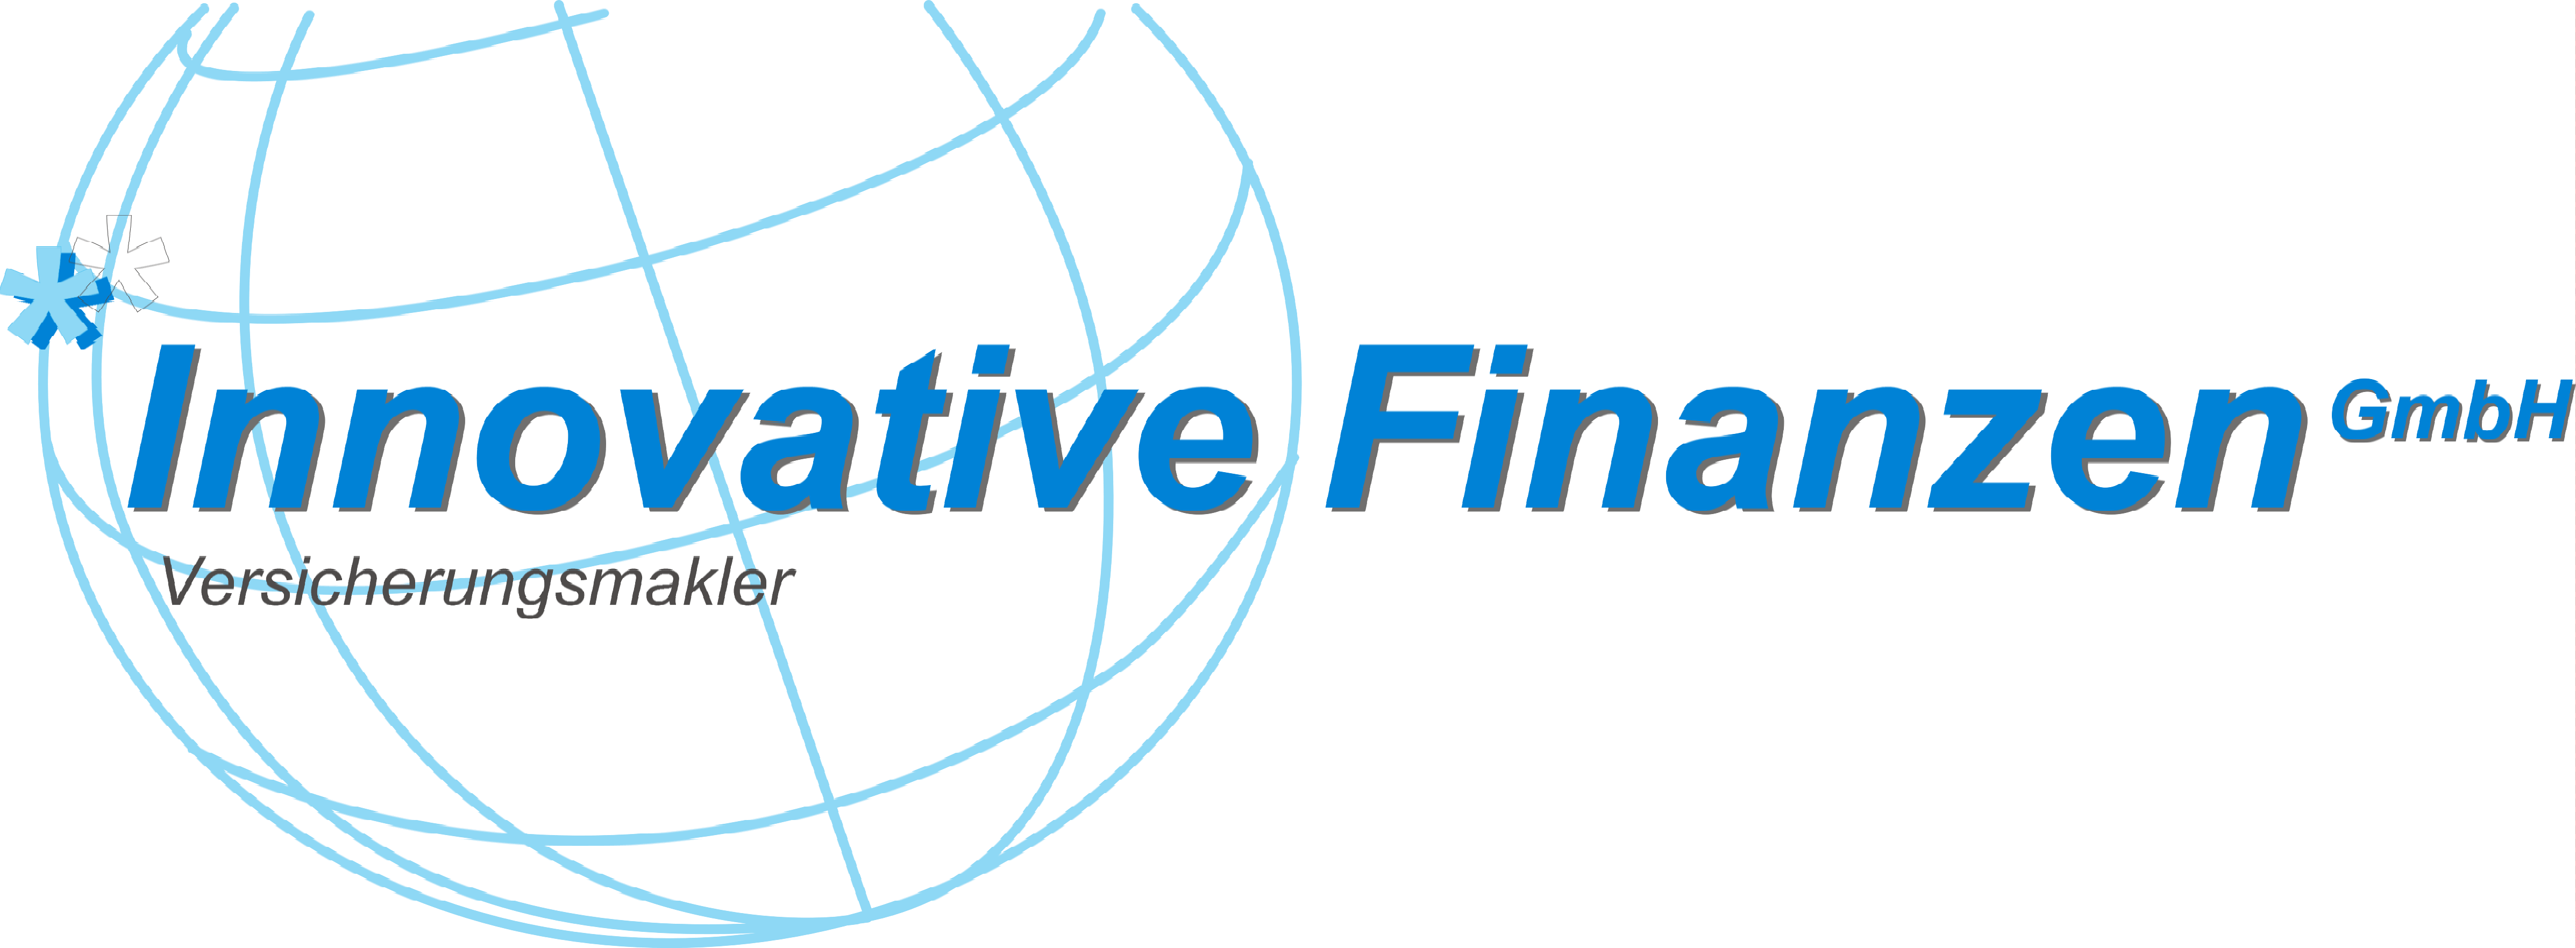  Innovative Finanzen GmbH